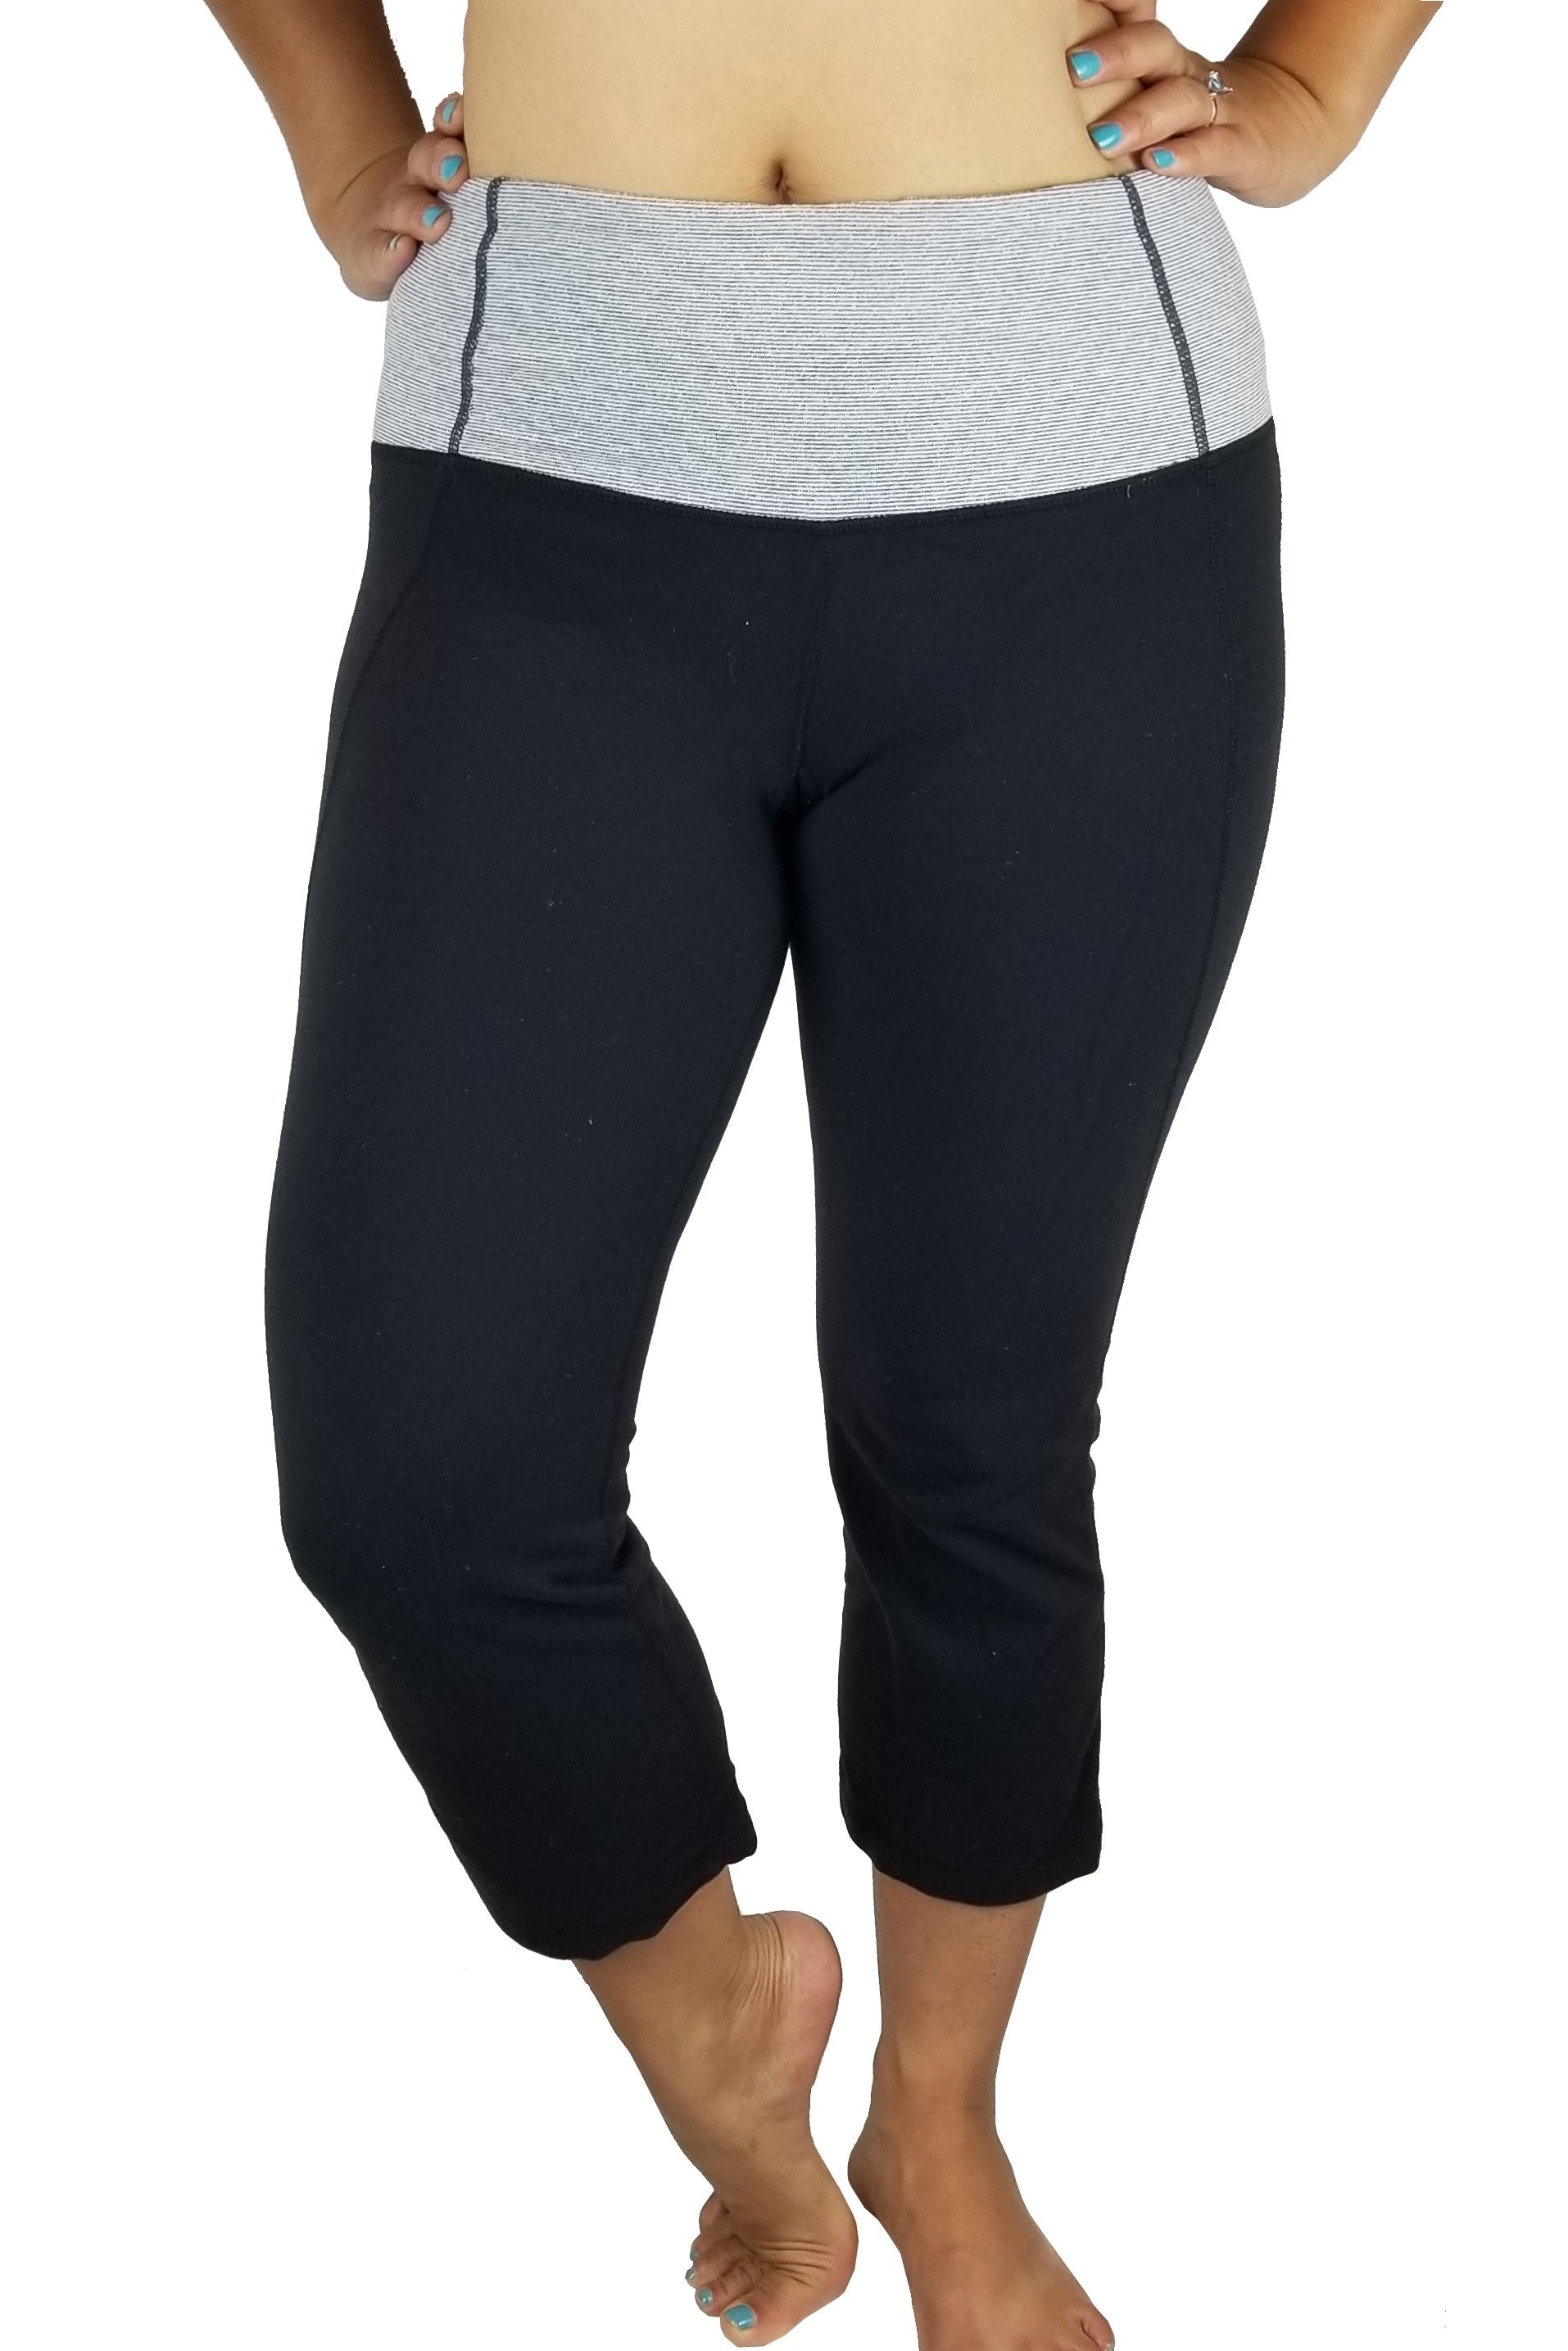 Rovga Yoga Pants For Women Activewear Plus Size Print Stretch Leggings -  Walmart.com